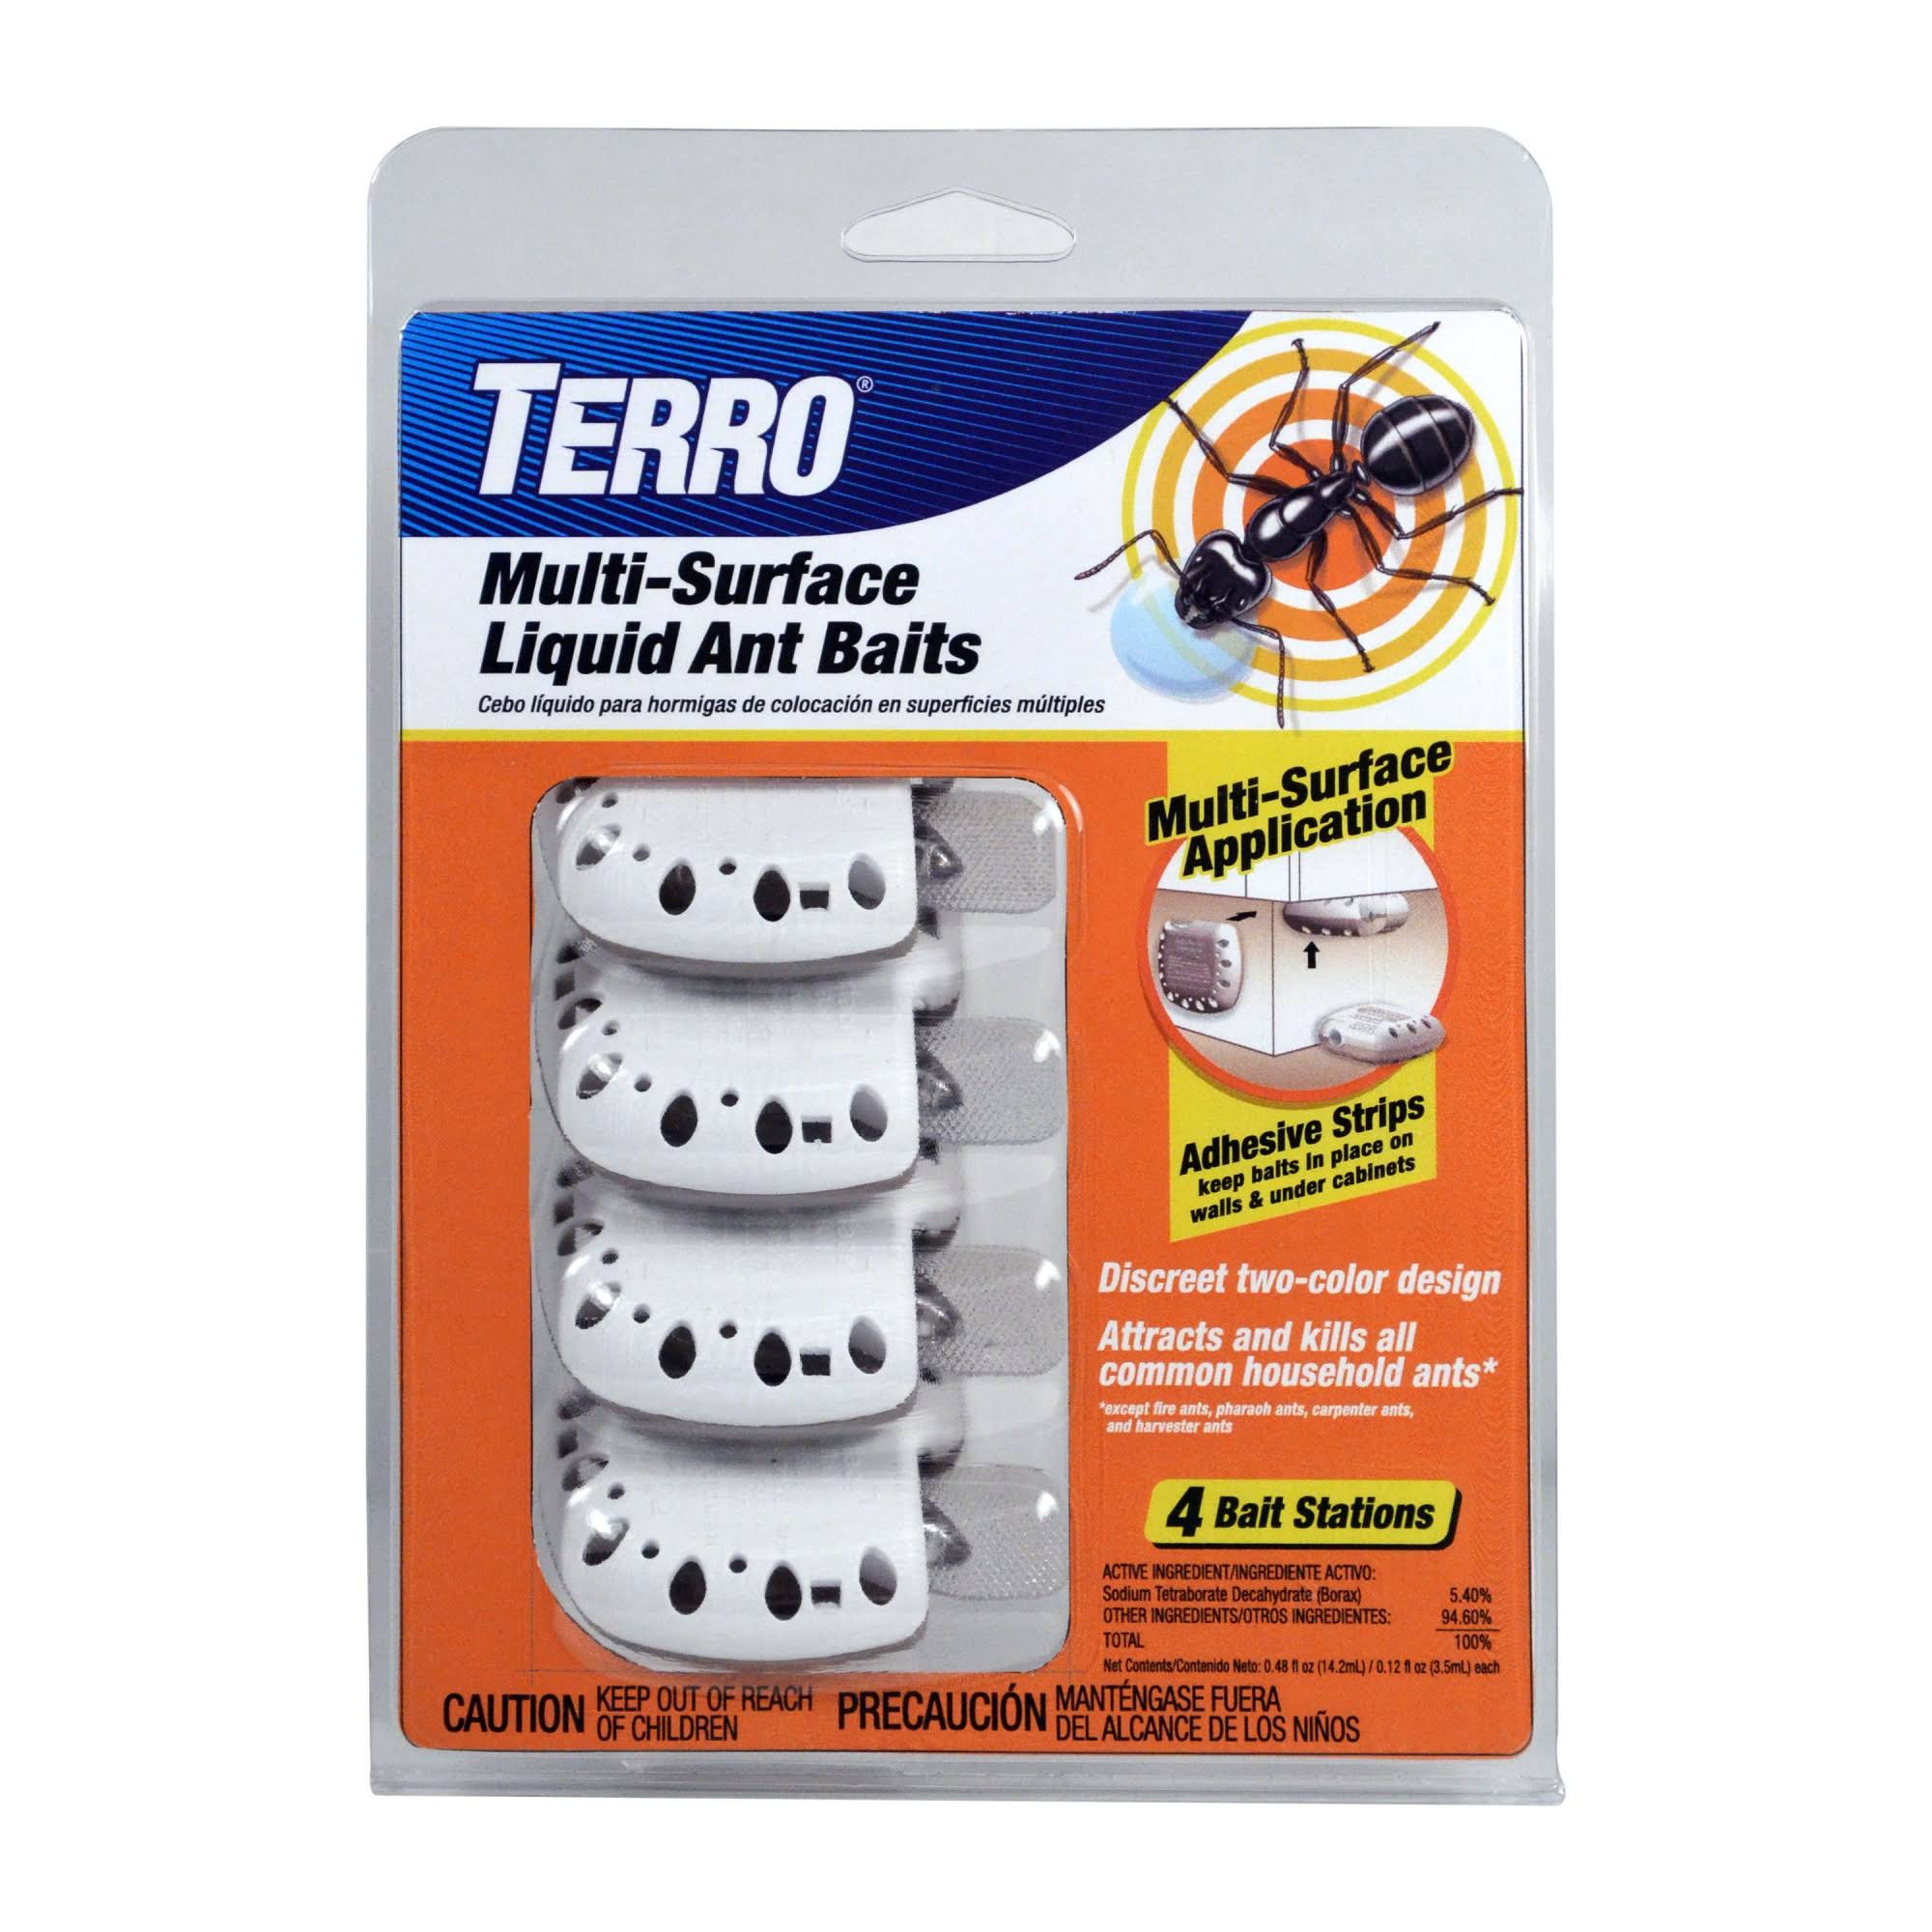 Terro Multi-Surface Liquid Ant Baits - 4 Bait Stations